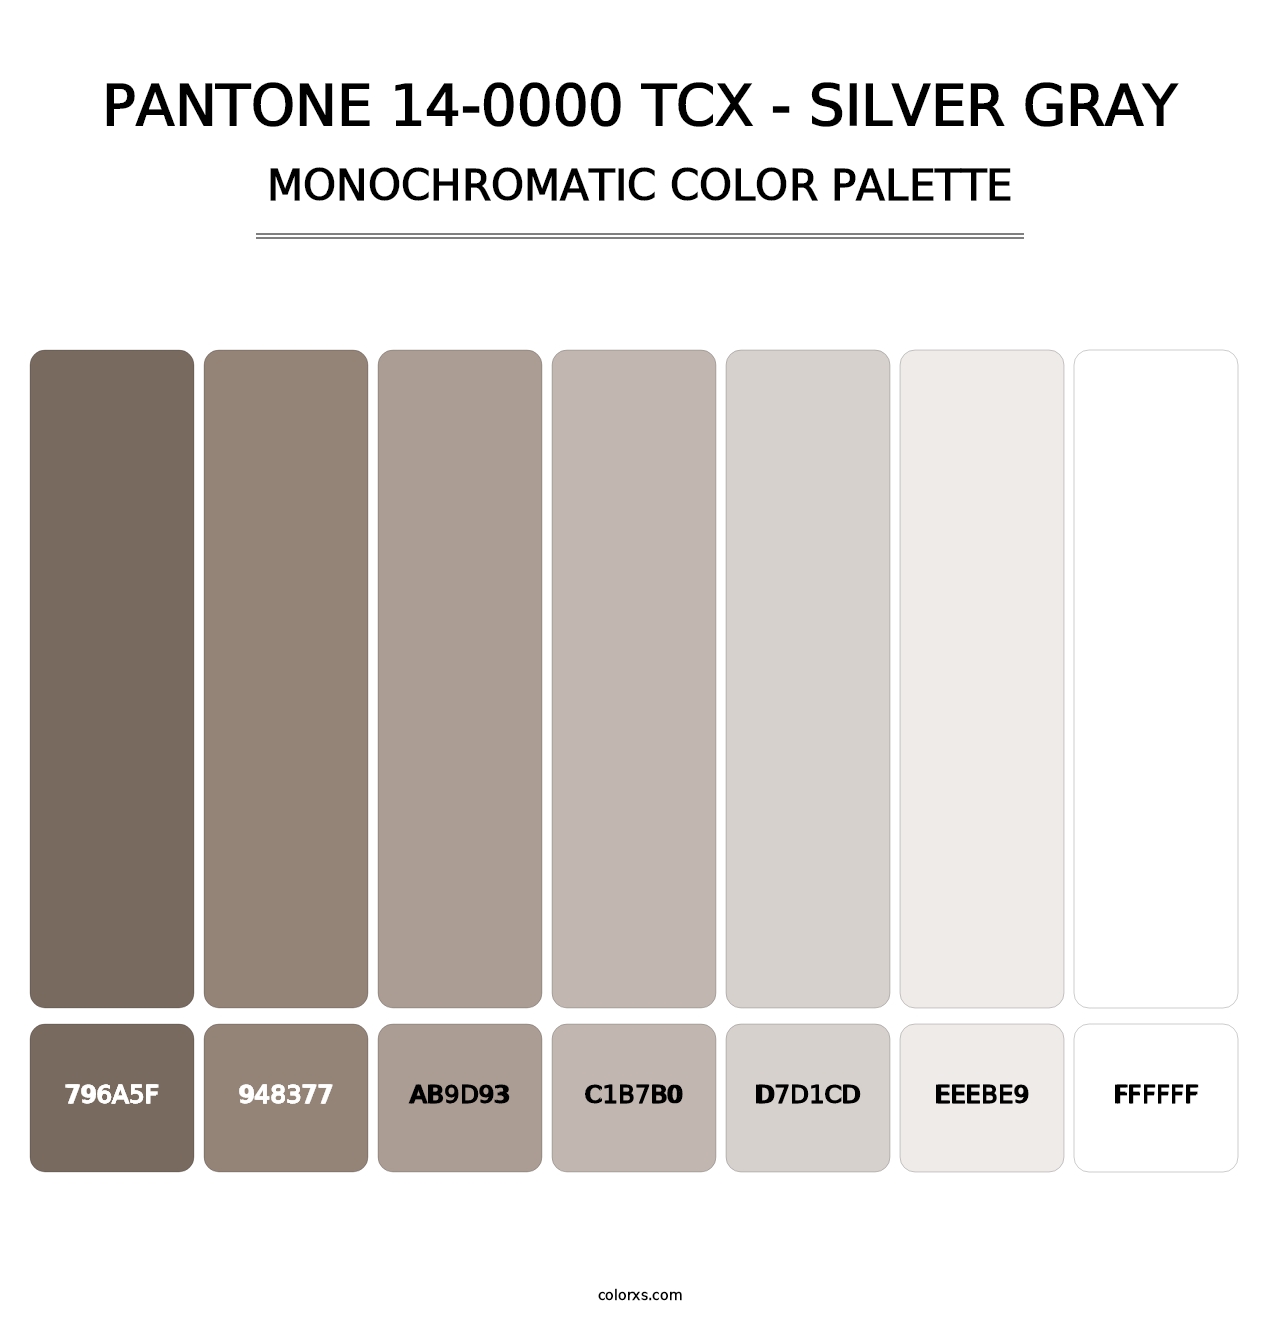 PANTONE 14-0000 TCX - Silver Gray - Monochromatic Color Palette